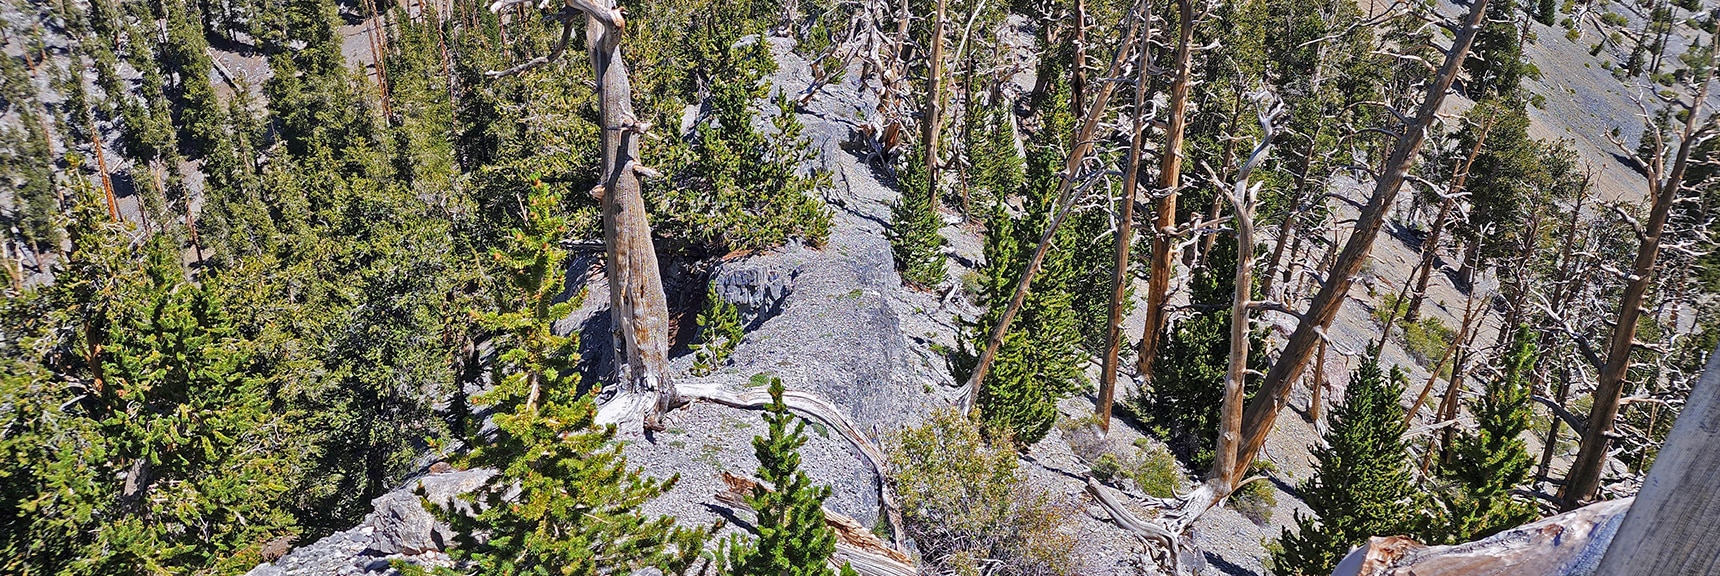 Limestone Cat Walk on the Lee/Kyle Canyon Upper Ridgeline | Mummy Mountain Grand Crossing | Lee Canyon to Deer Creek Road | Mt Charleston Wilderness | Spring Mountains, Nevada |